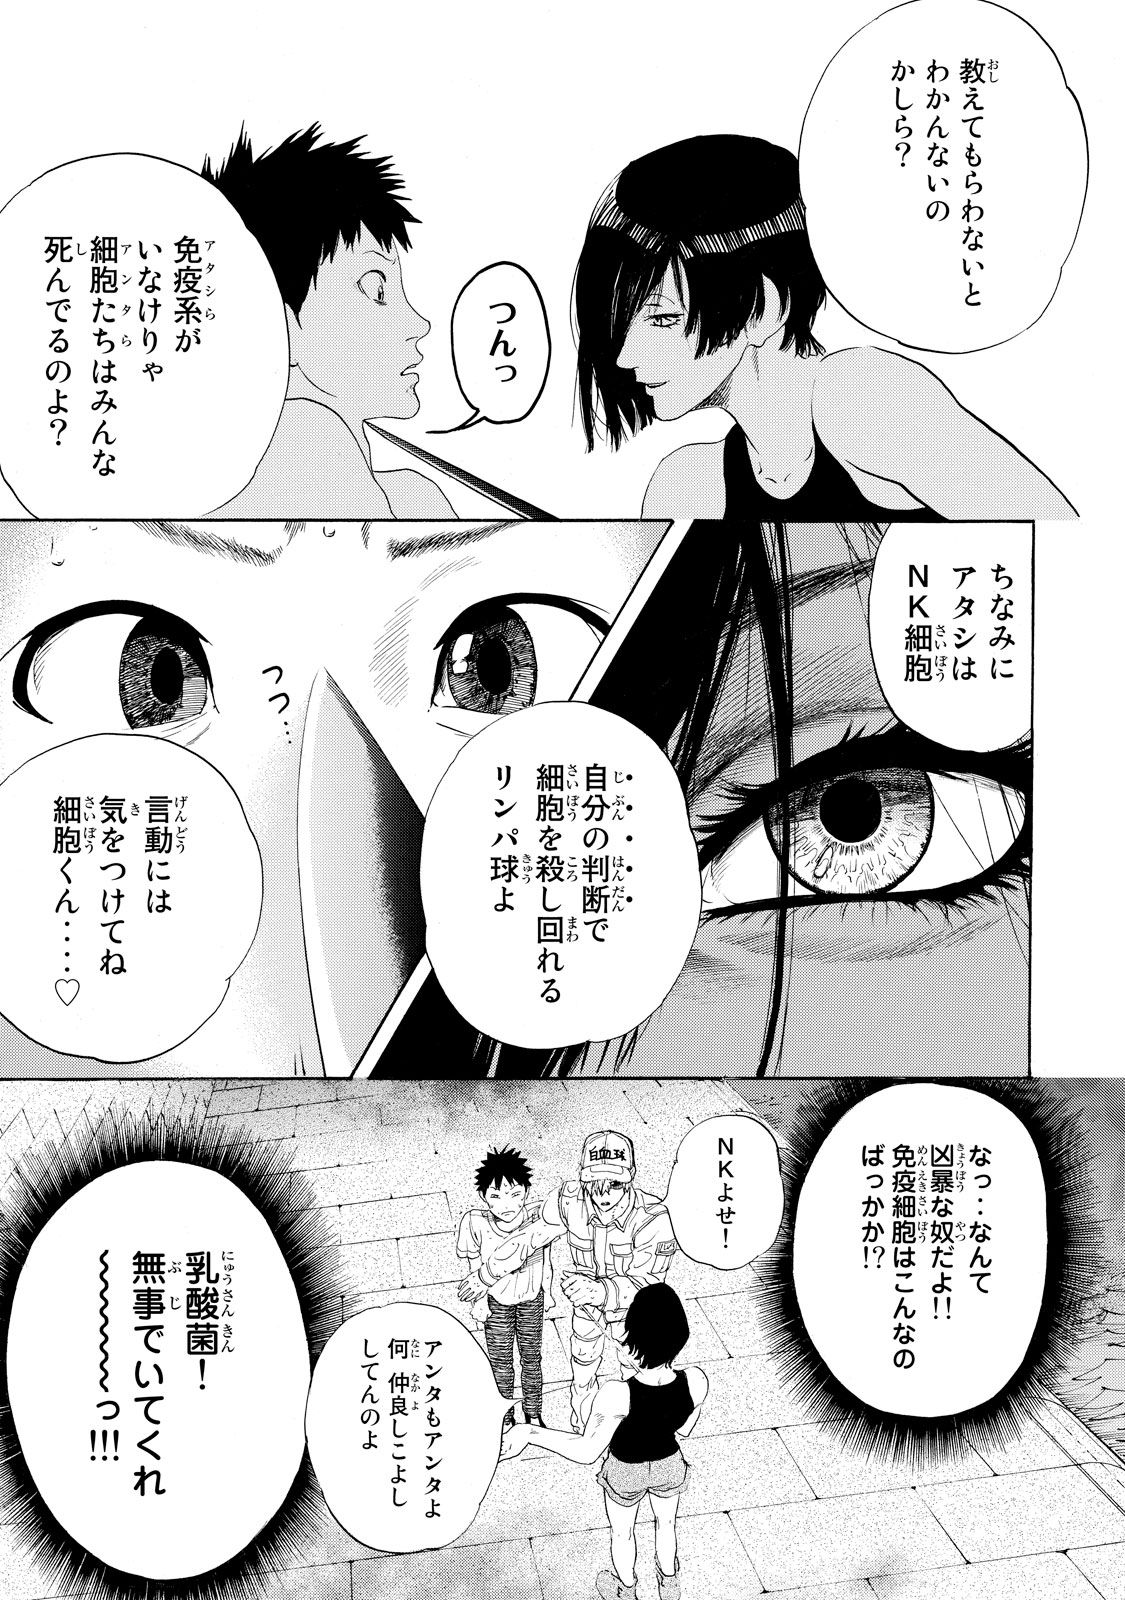 Hataraku Saibou - Chapter 21 - Page 15